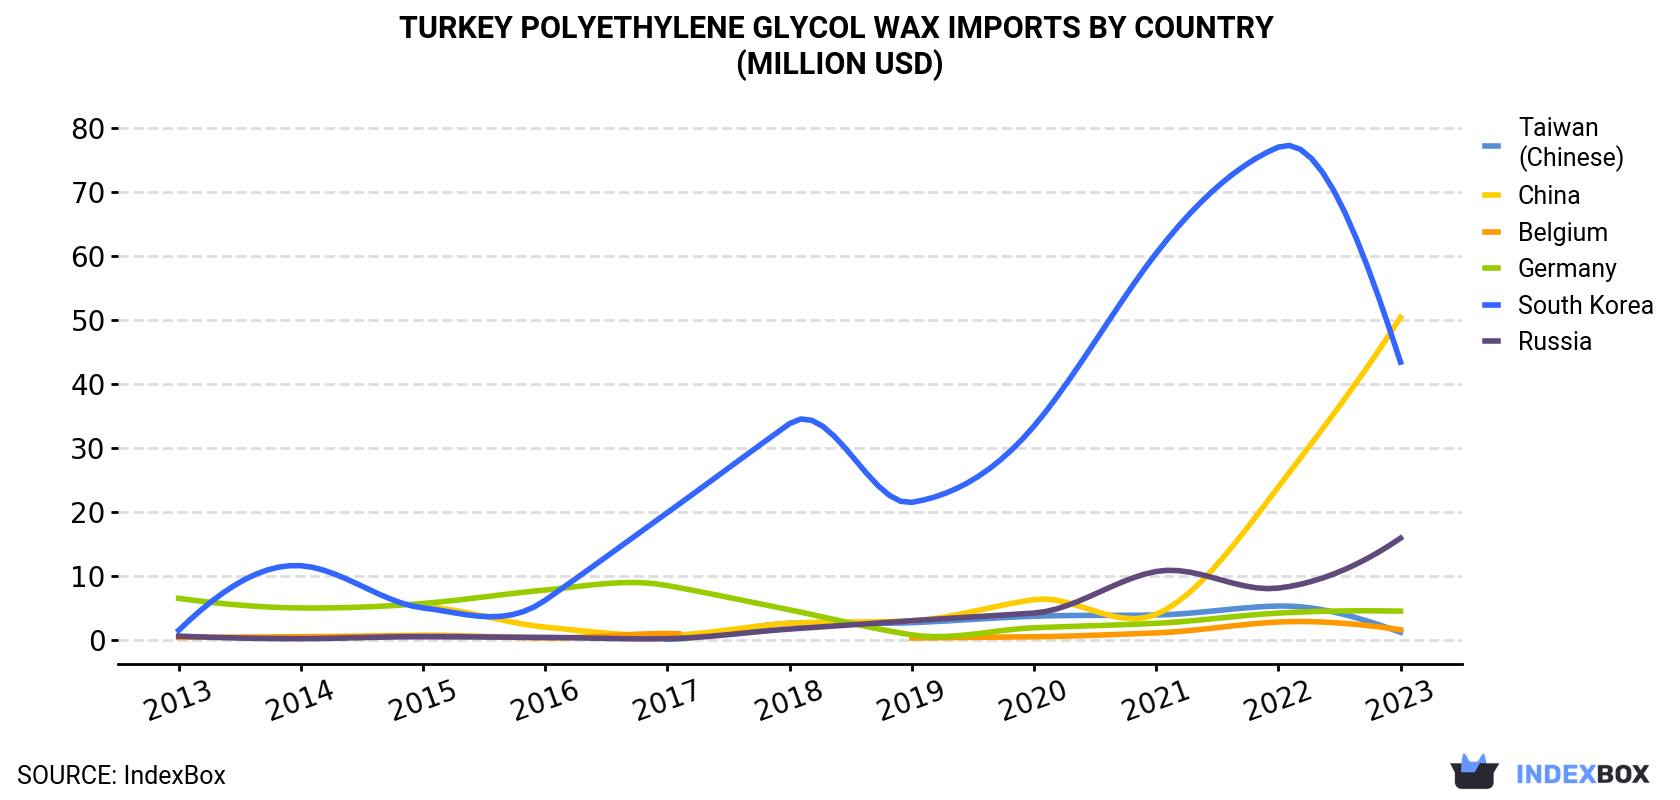 Turkey Polyethylene Glycol Wax Imports By Country (Million USD)